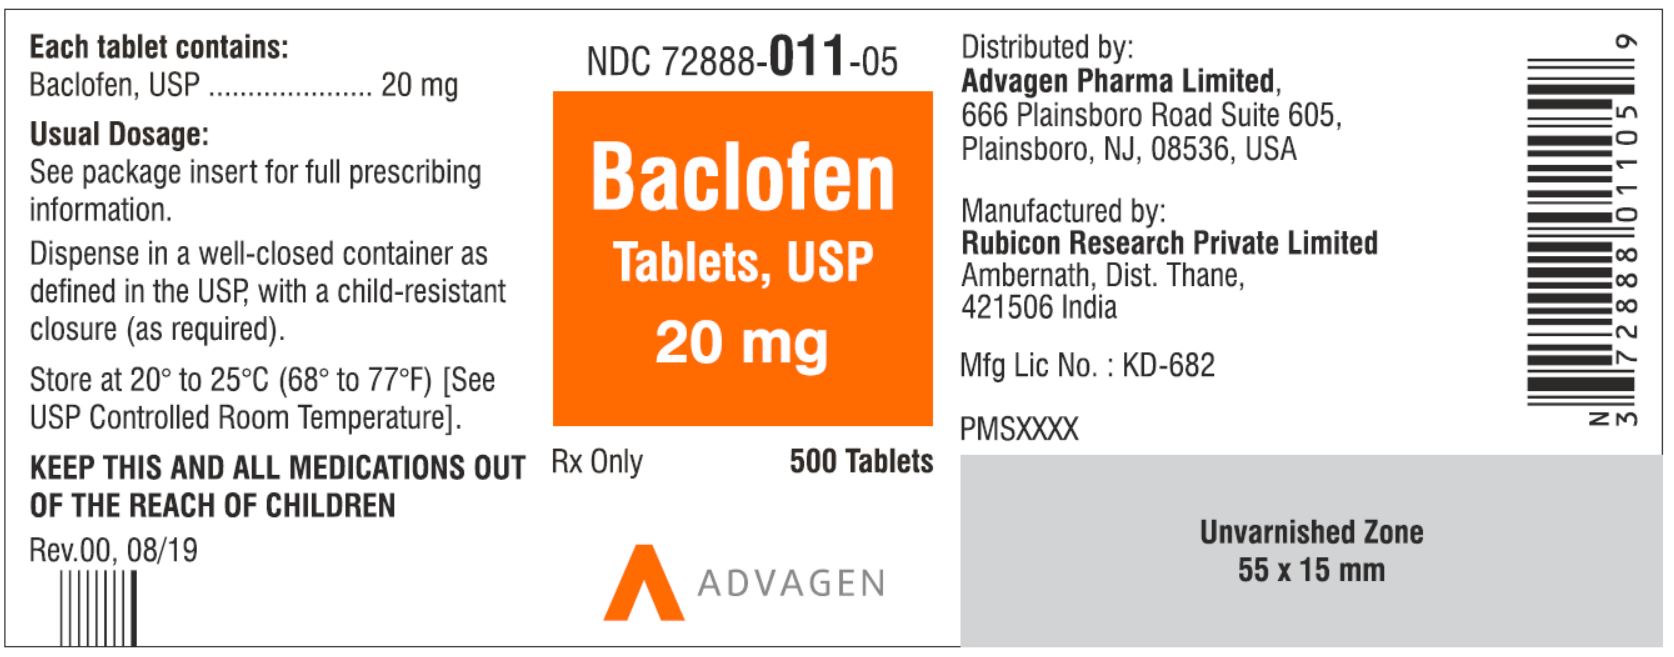 NDC: <a href=/NDC/72888-011-05>72888-011-05</a> - Baclofen Tablets, USP 20 mg - 500 Tablets